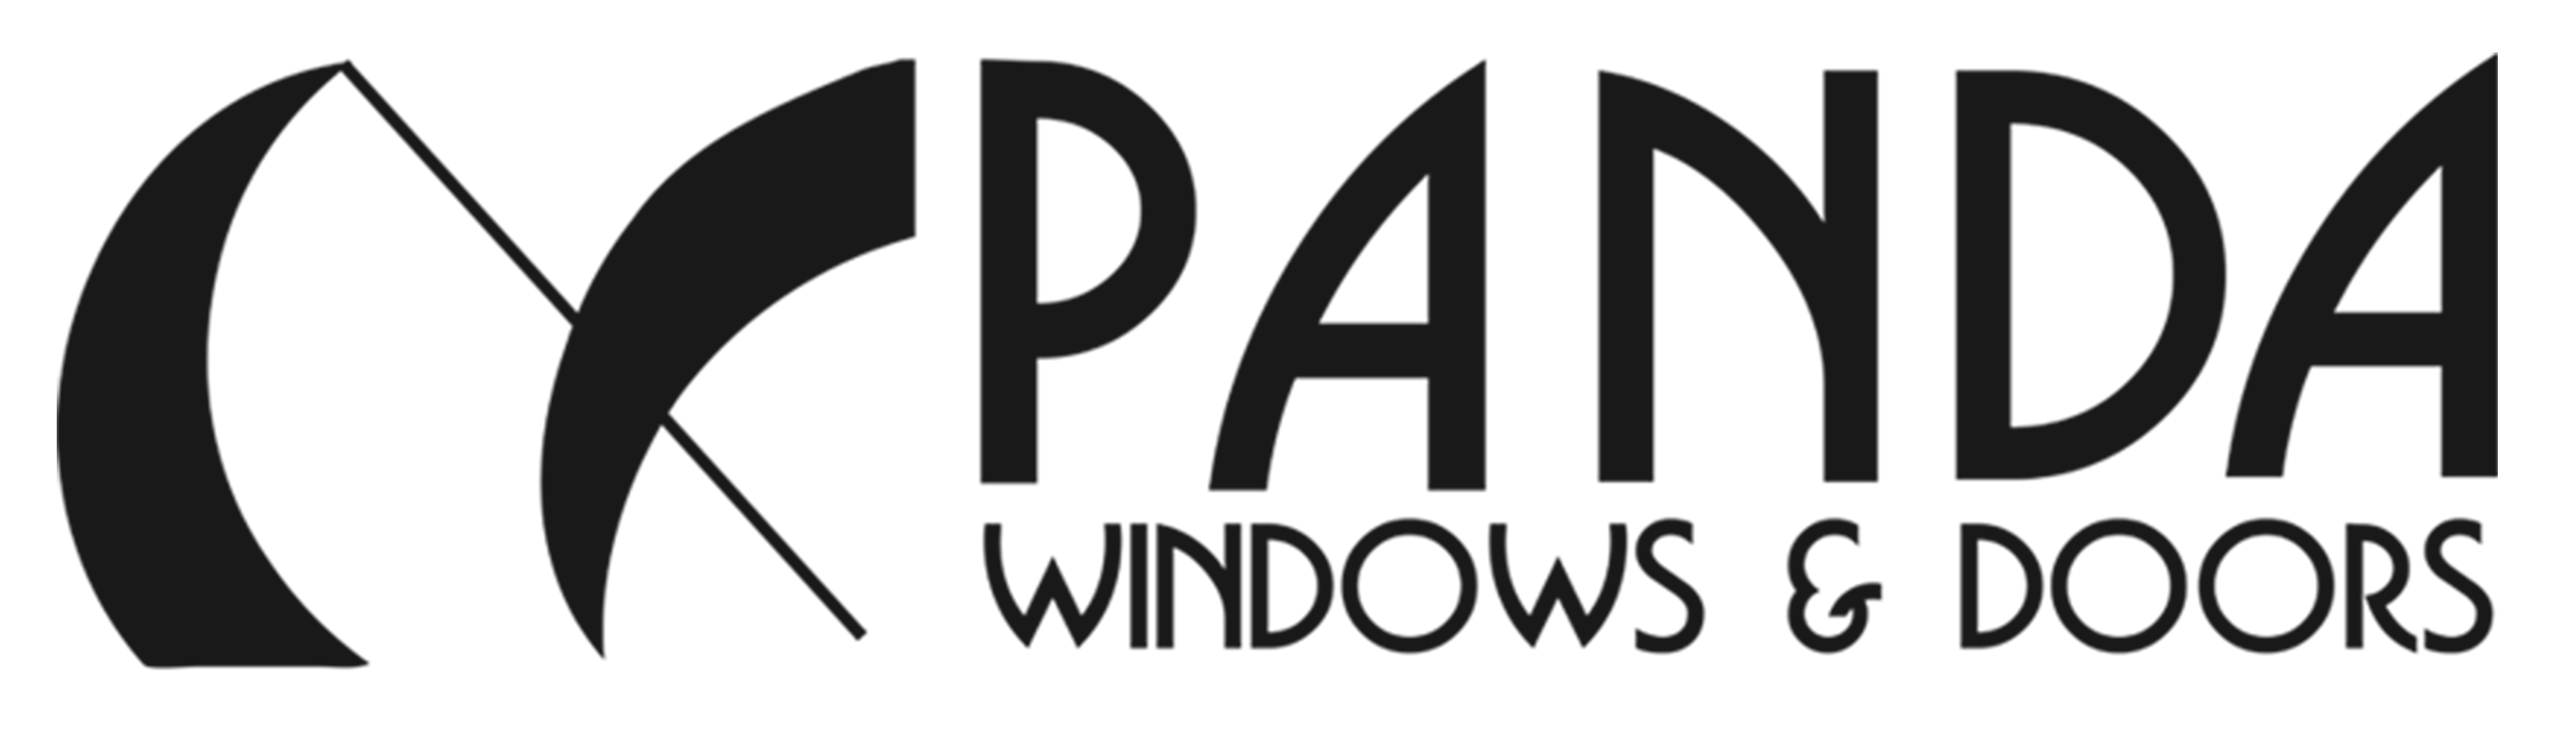 Panda commercial windows and doors